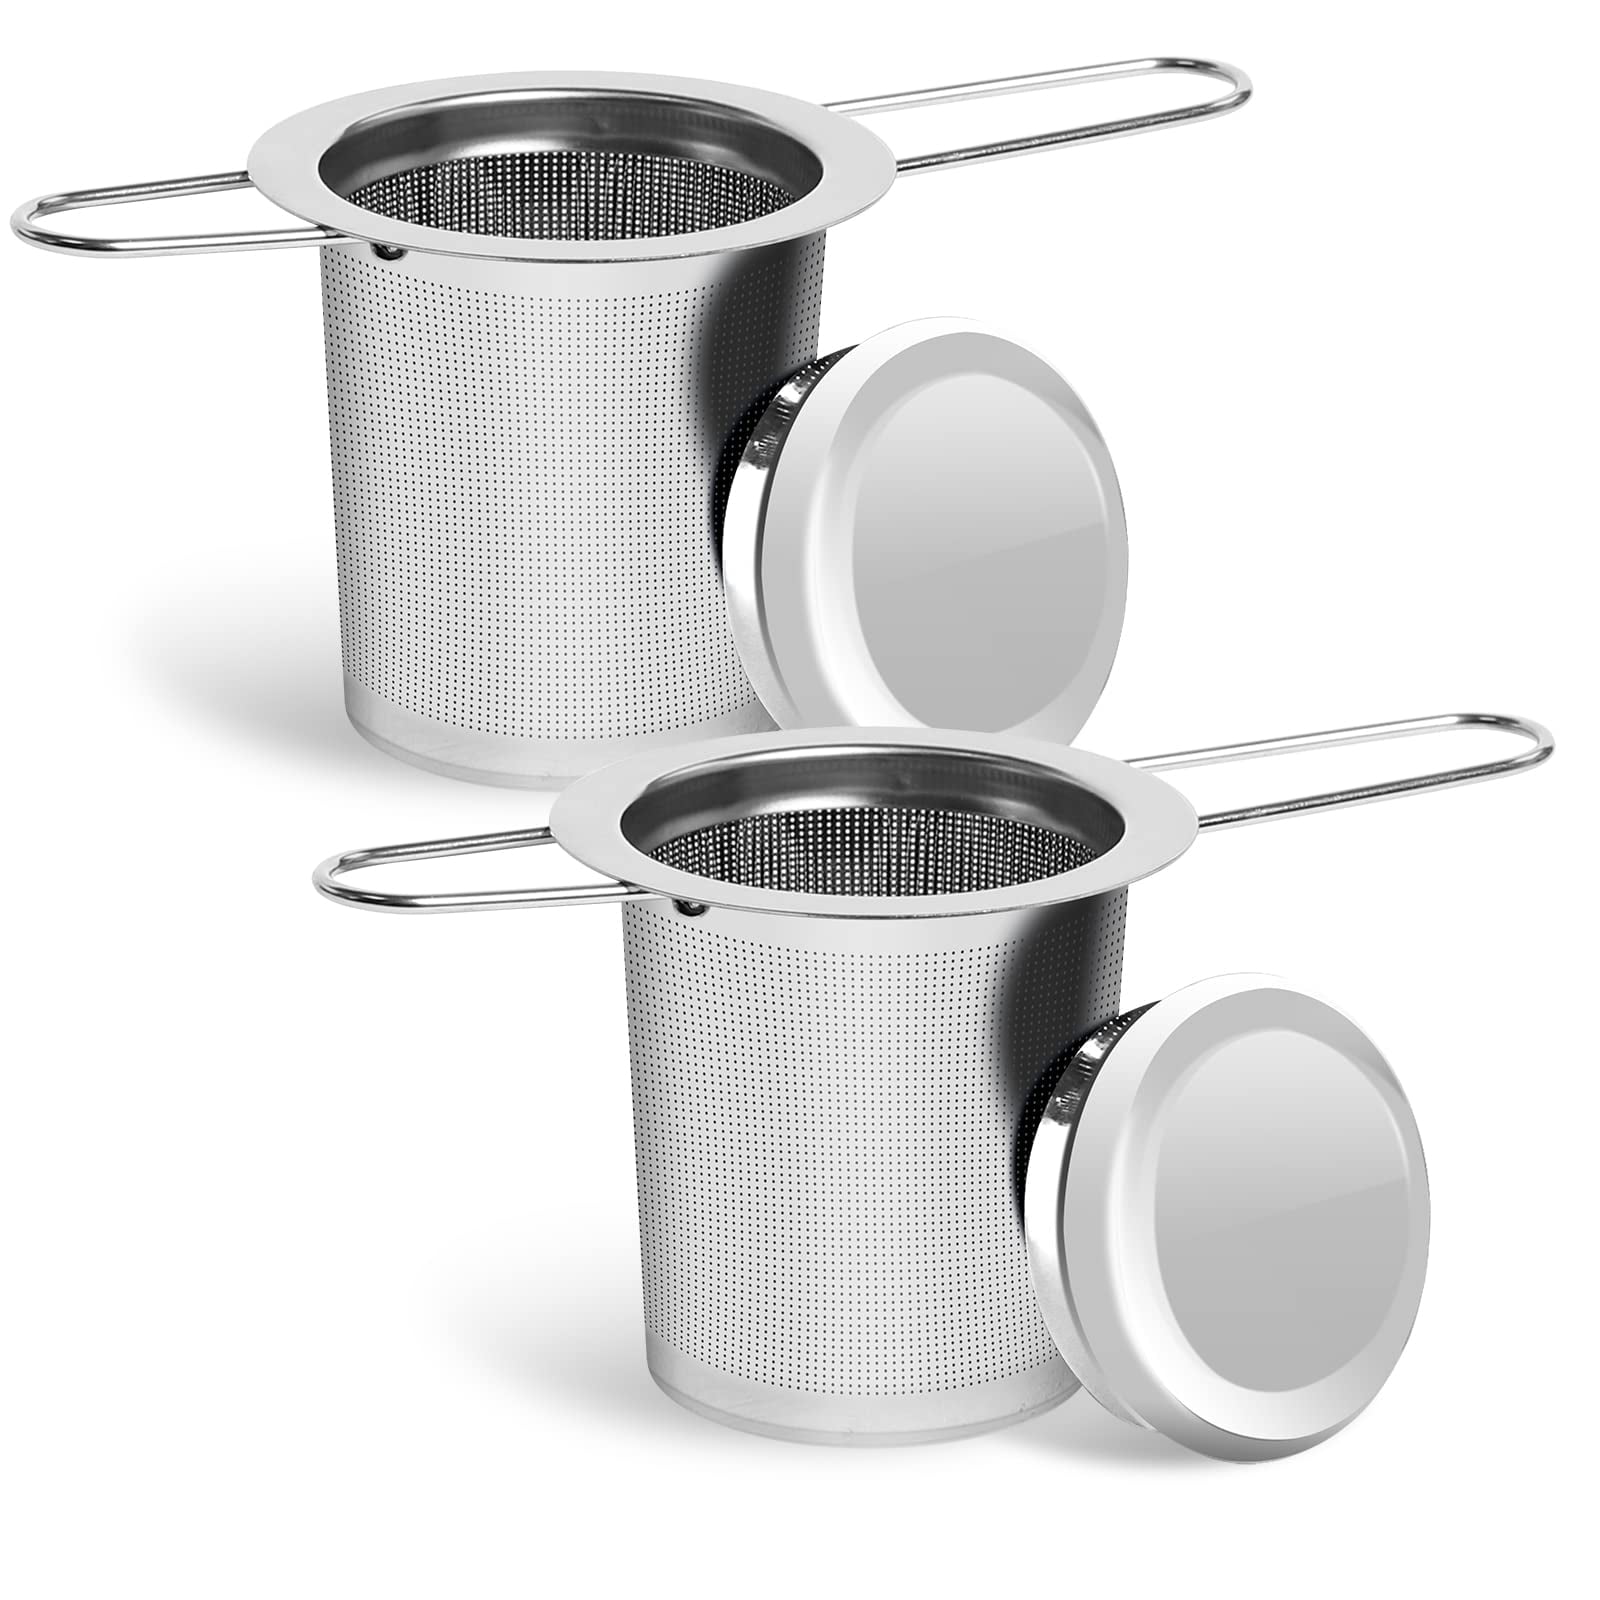 Tea Infuser Tea Filter Stainless Steel Strainer for Loose Leaf Tea Foldable Handle Design Suitable for Most Tea Cups and Tea Bowls 2 Pack